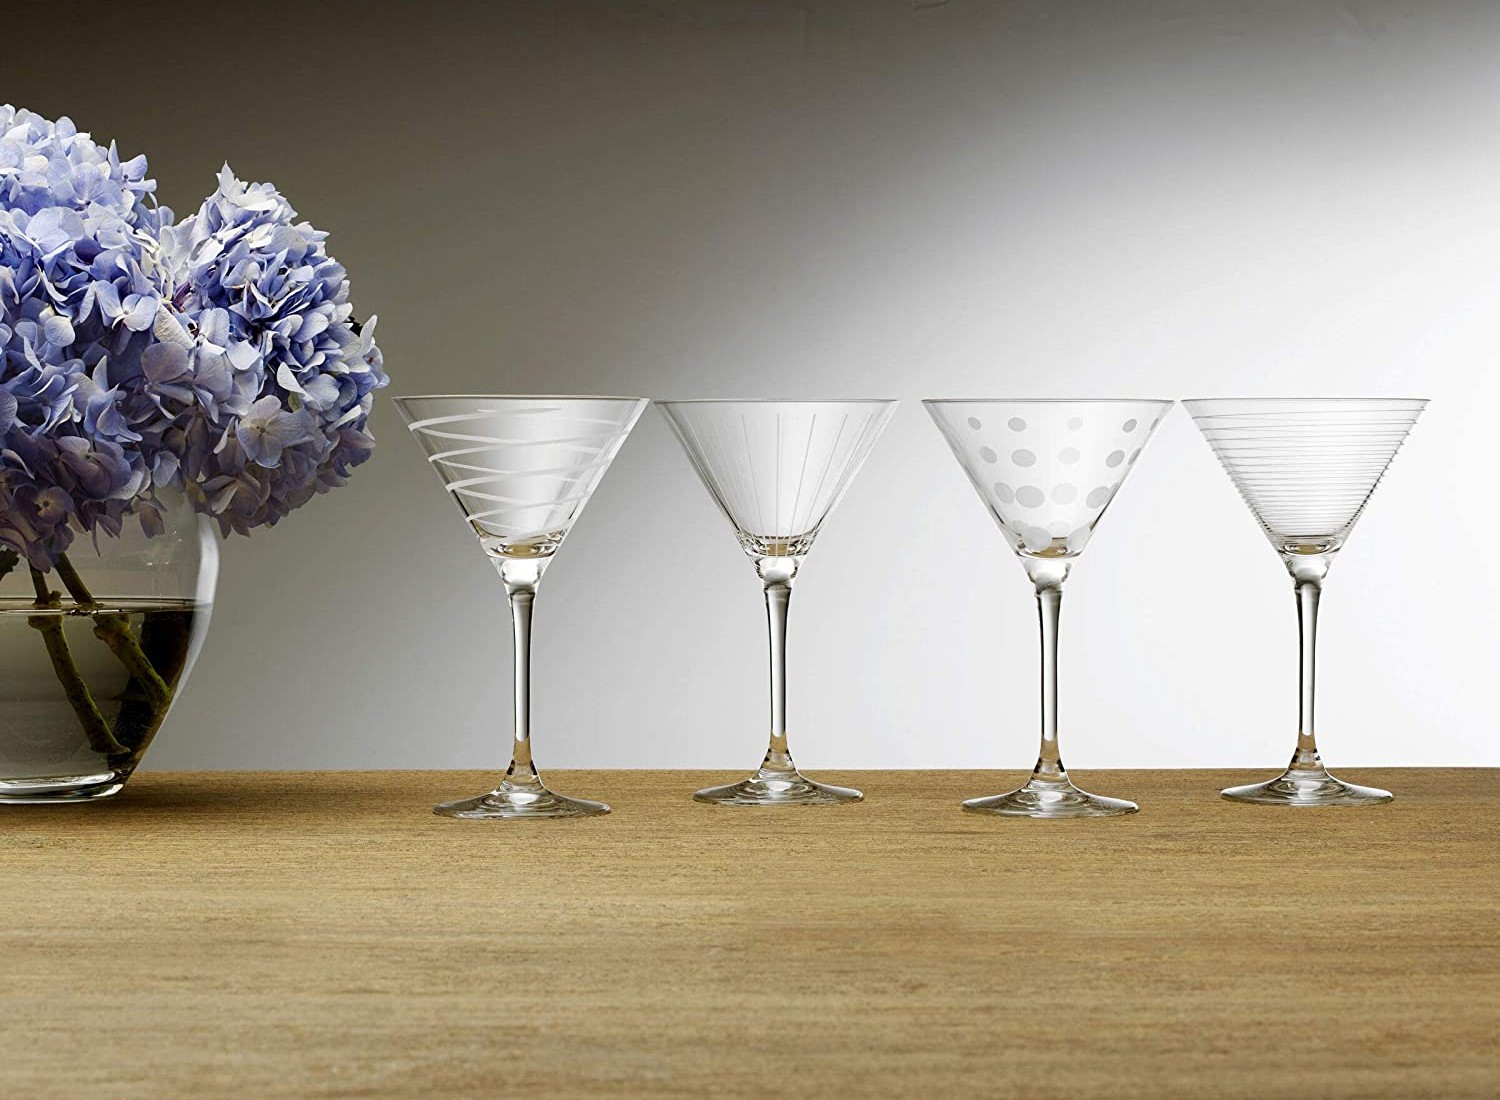 https://www.brit.co/reviews/wp-content/uploads/2023/04/mikasa-cheers-martini-glasses-britco.jpg